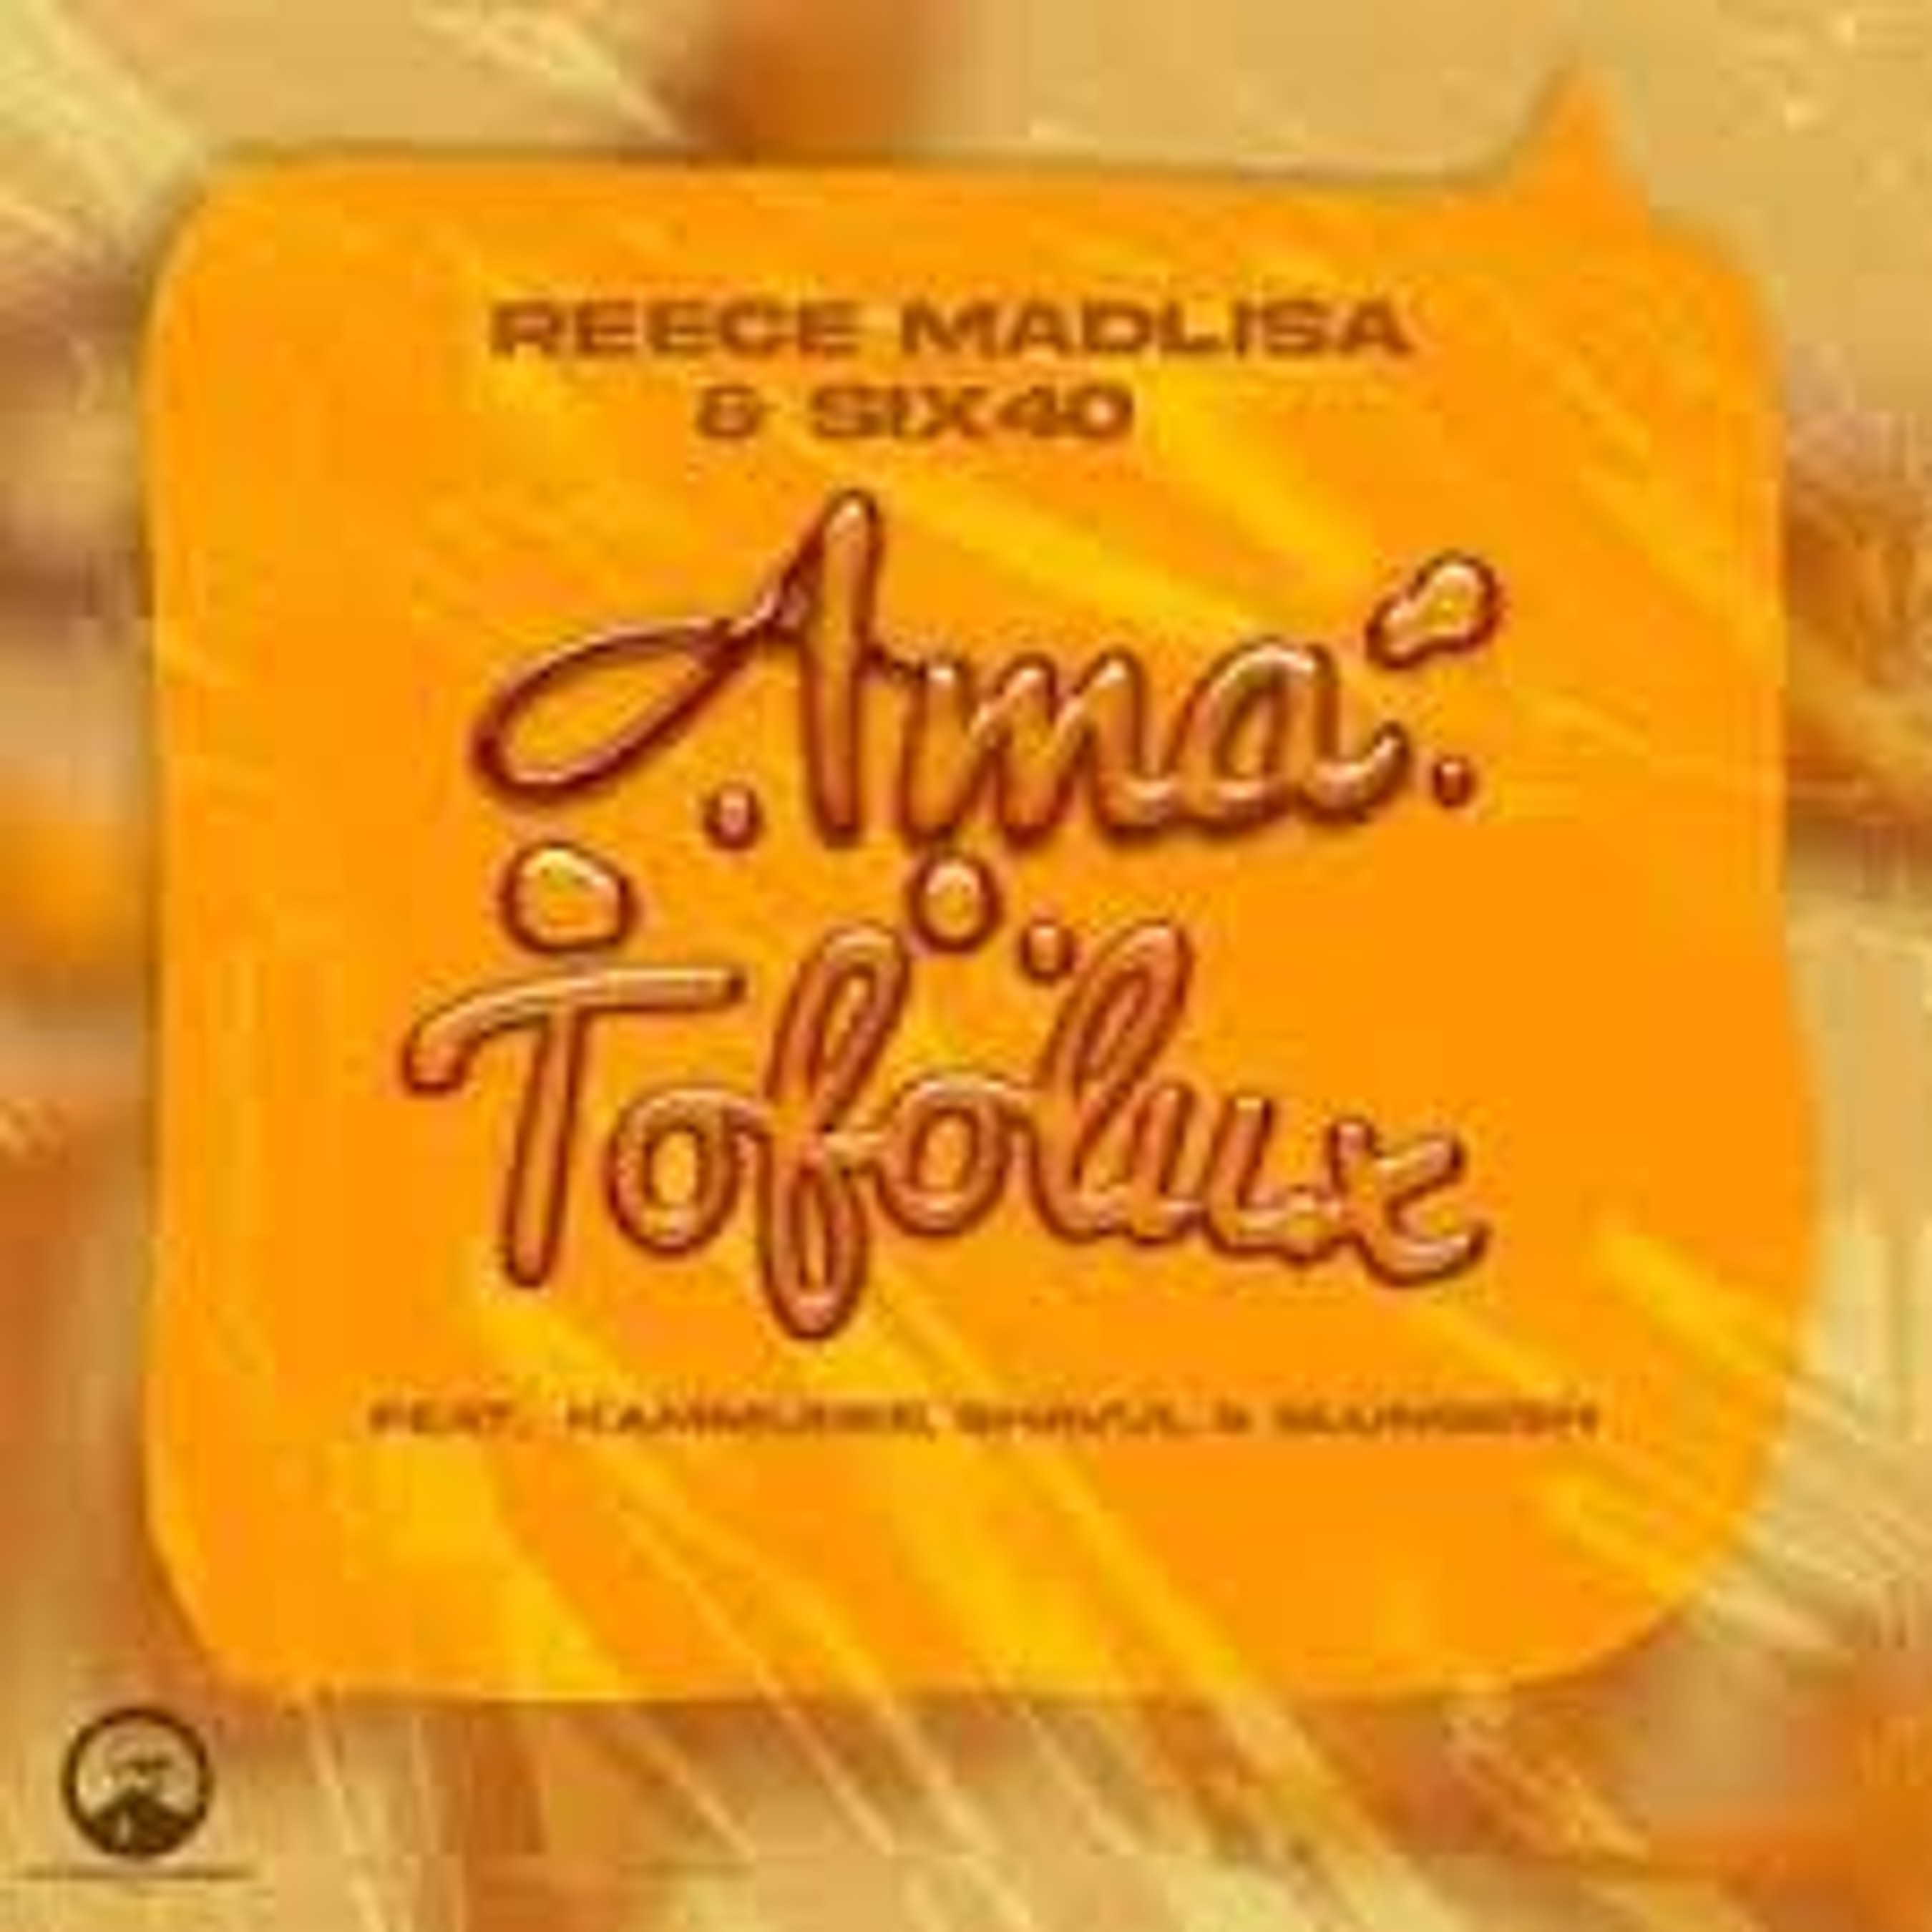 Reece Madlisa & six40 – Ama Tofolux ft Kammu Dee, Shavul & Slungesh  Mp3 Download Fakaza: